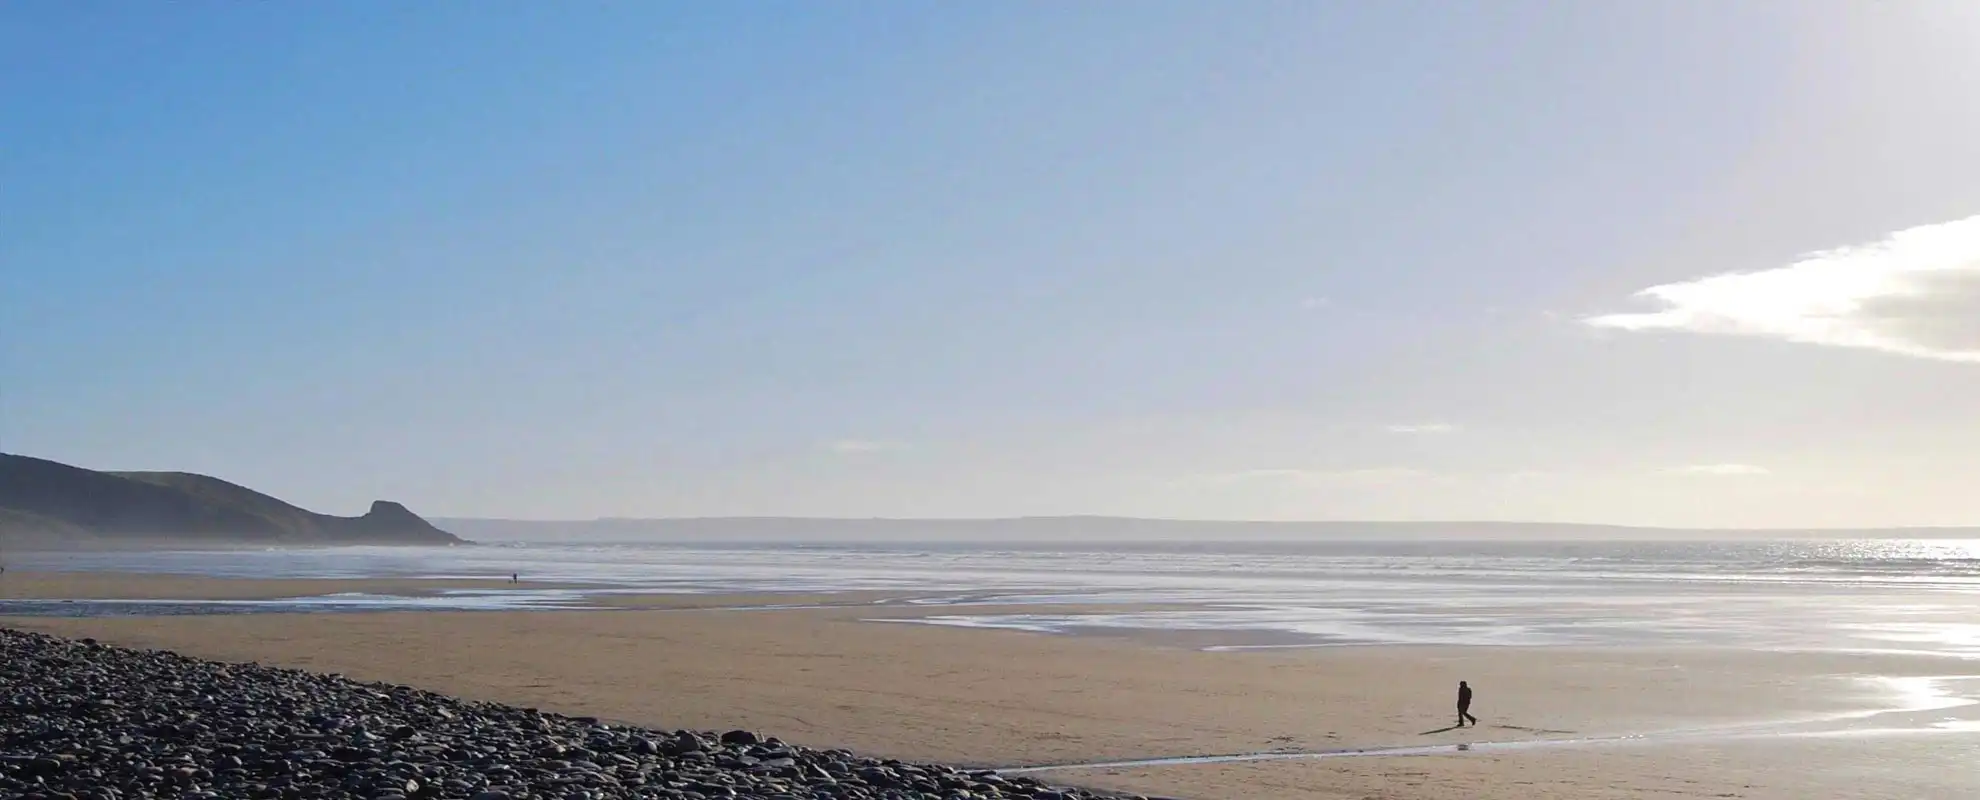 Newgale beach on Pembrokeshire's west coast